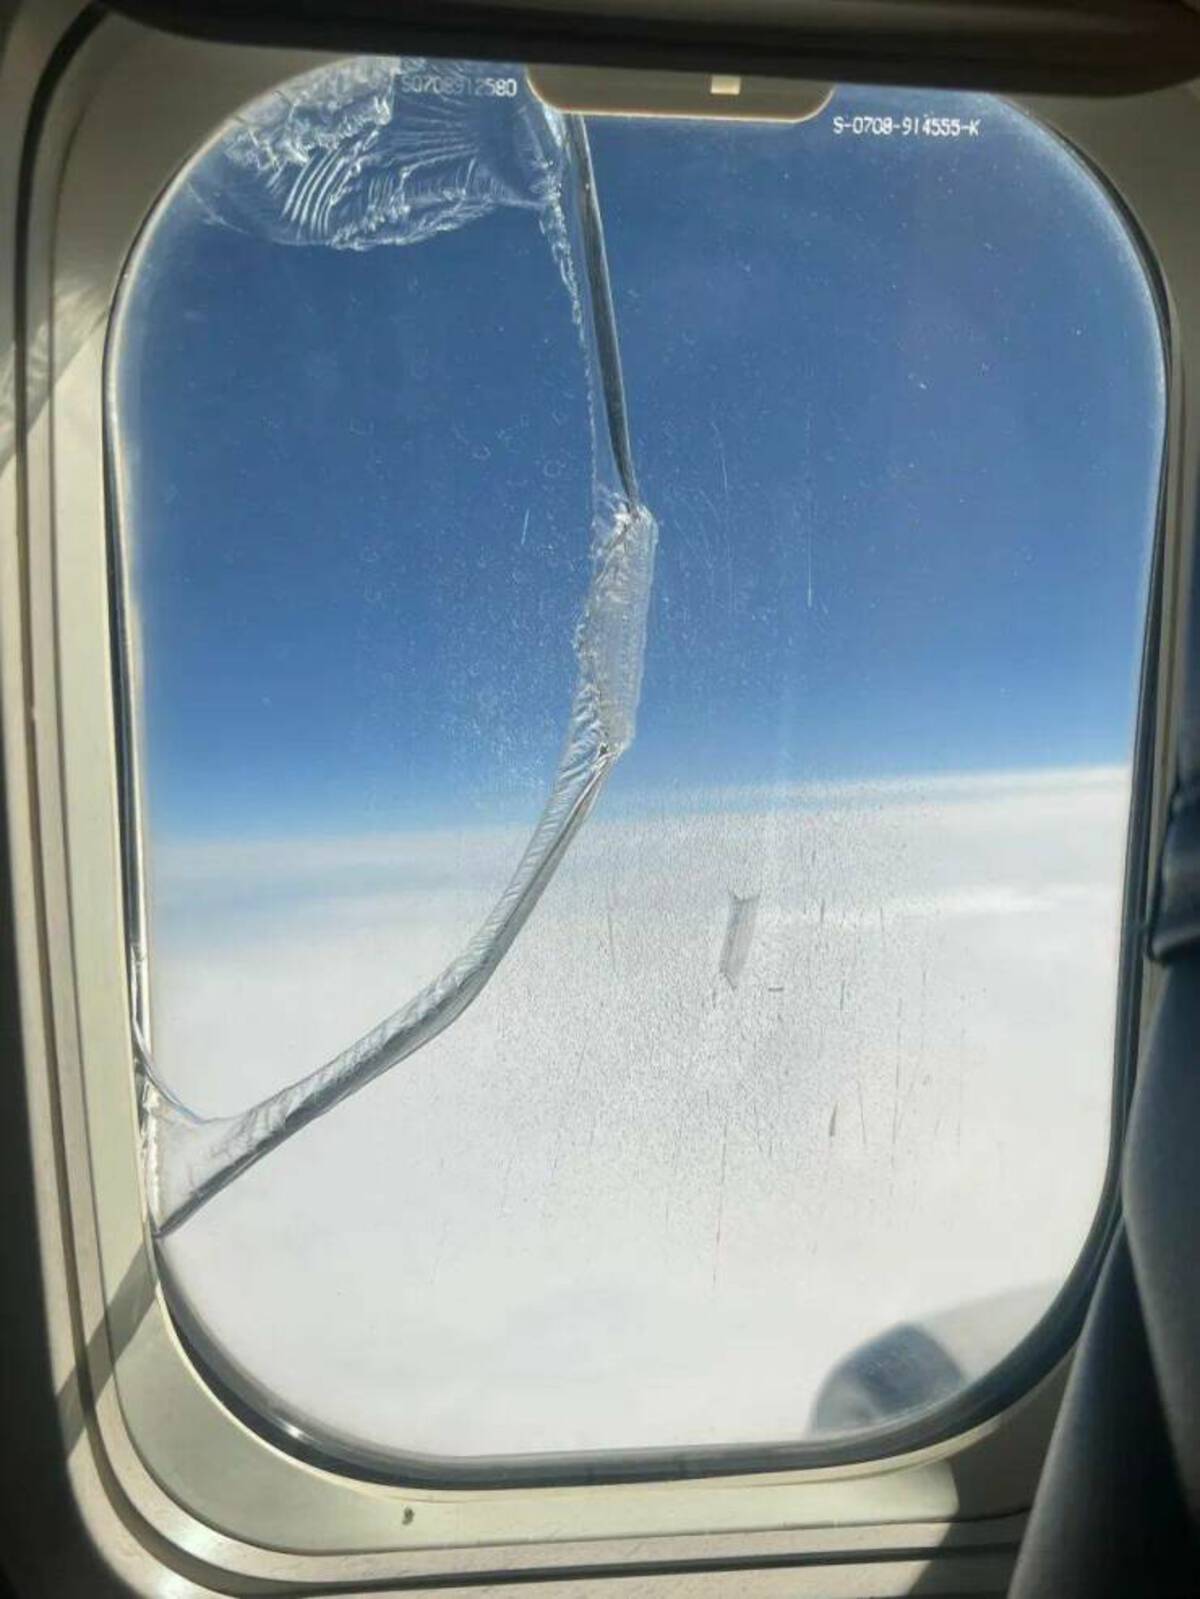 cracked airplane window - 50708912580 S0708914555K